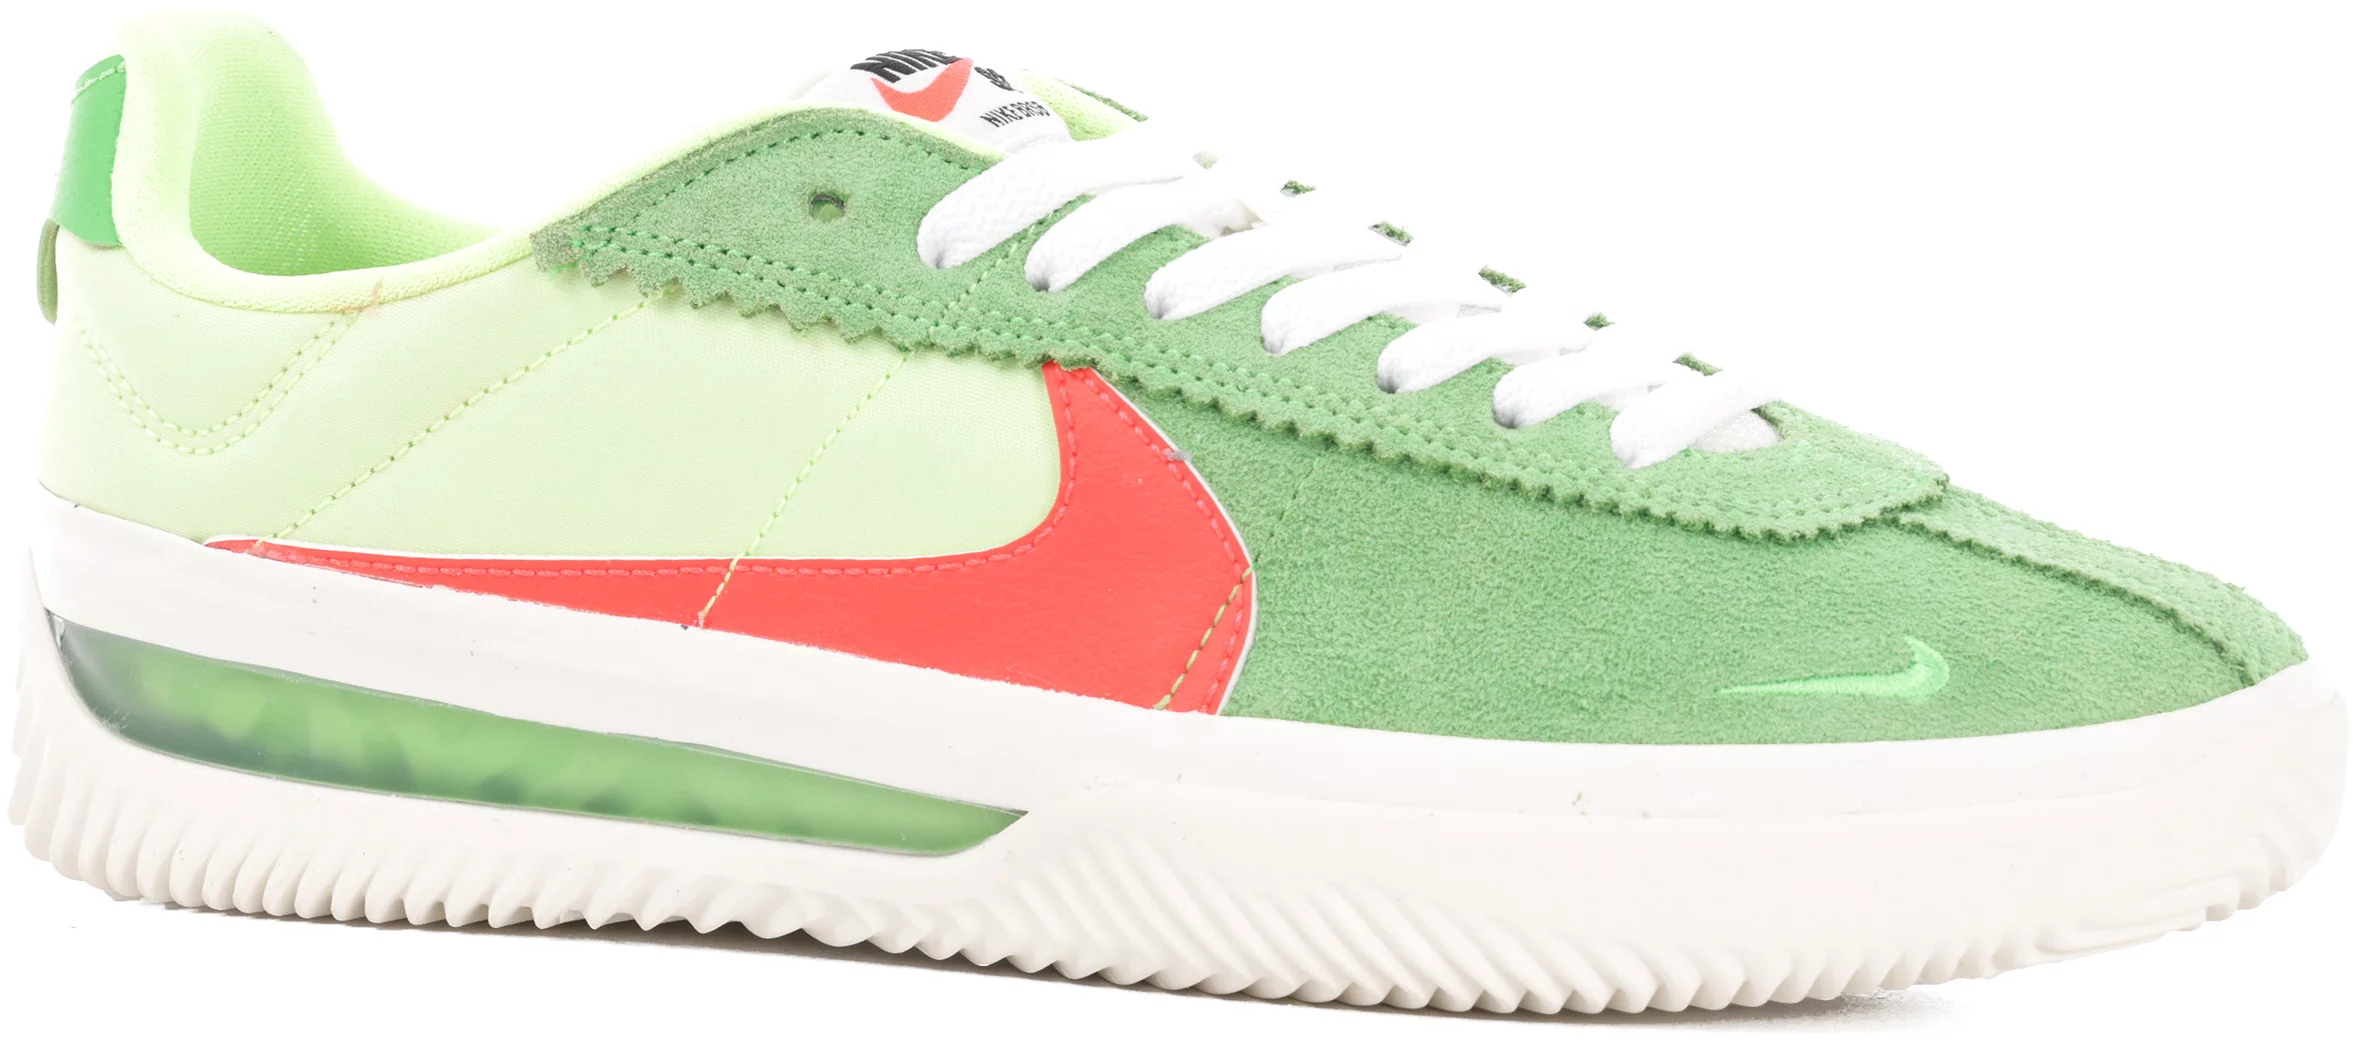 Nike SB BRSB Eco Skate Shoes - ghost green/bright crimson-scream green -  Free Shipping | Tactics